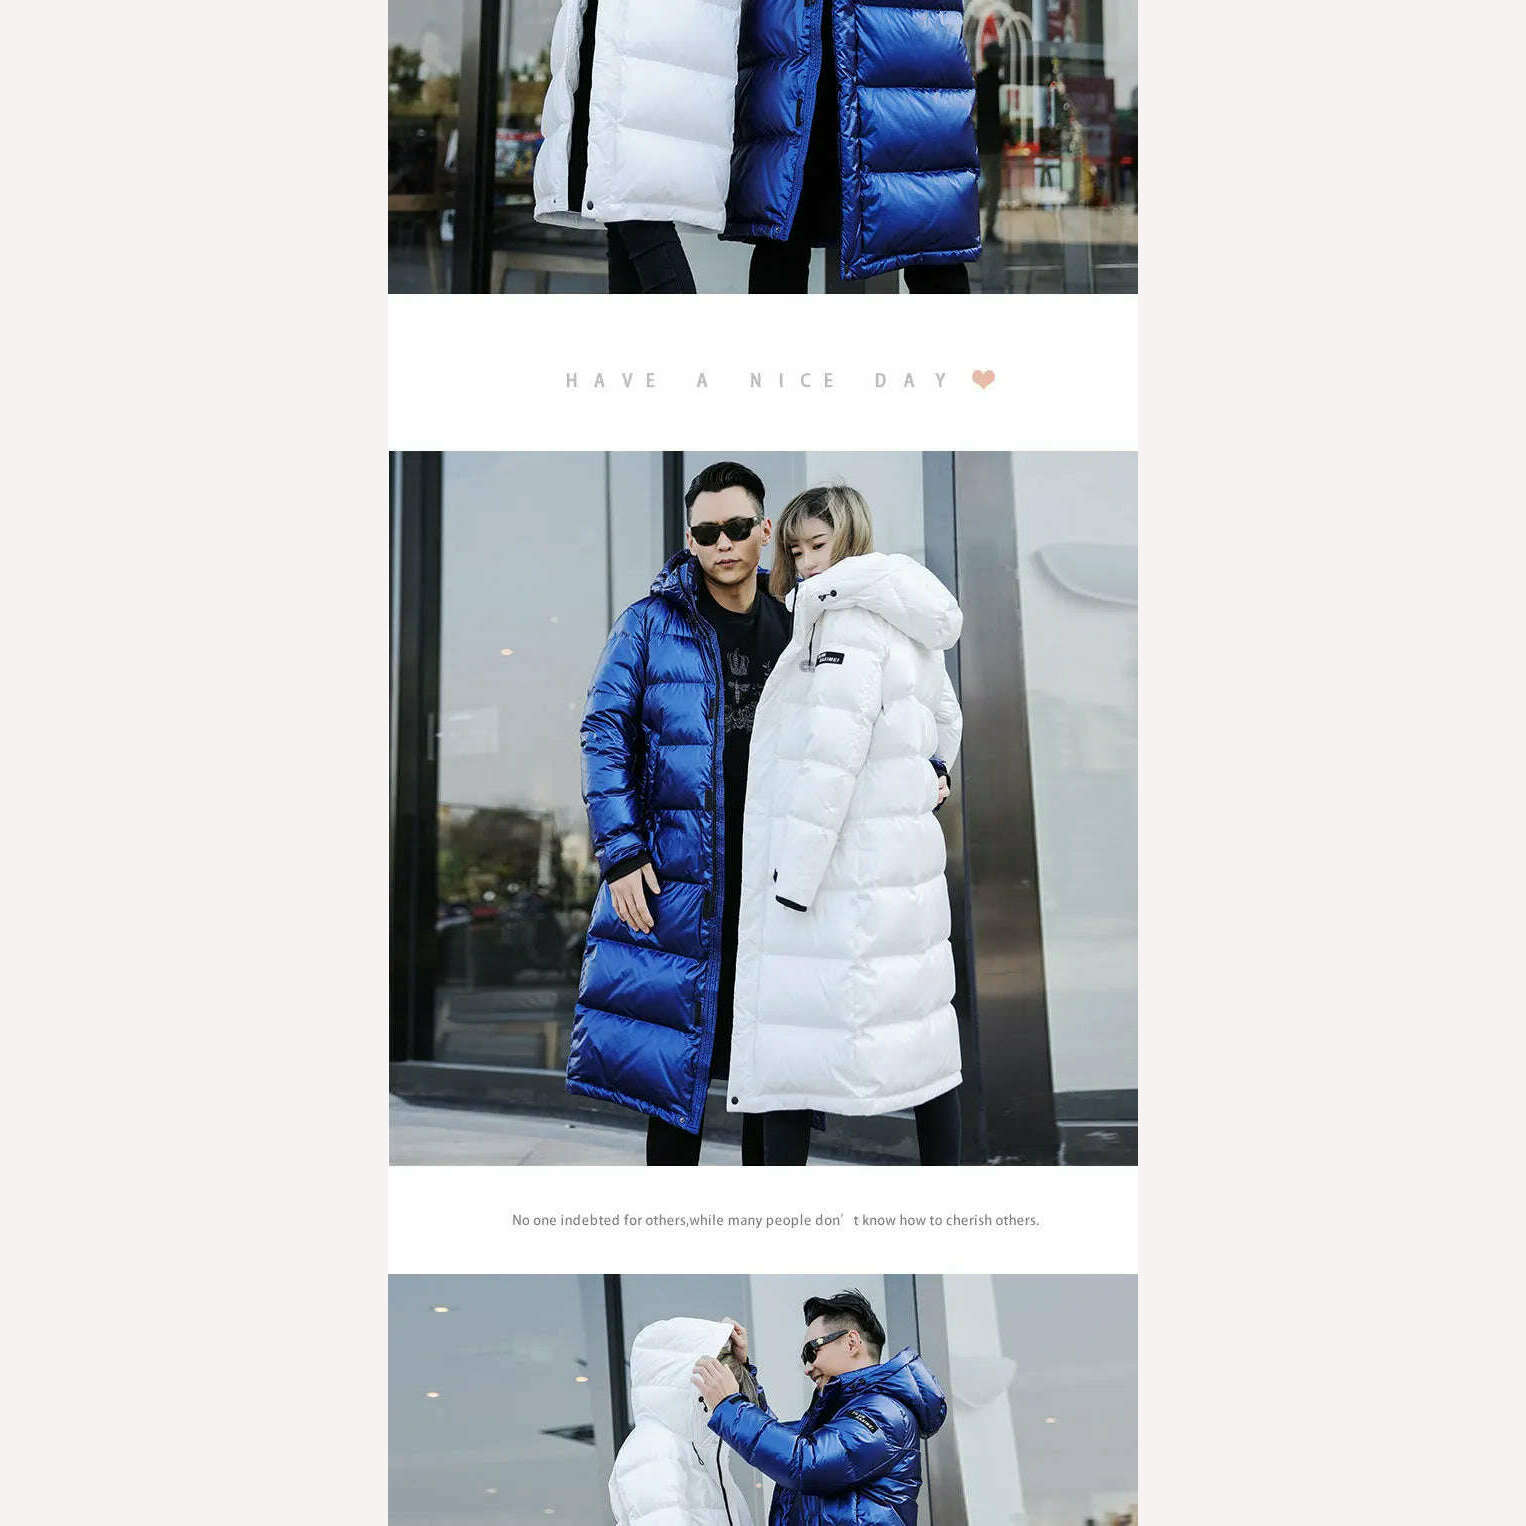 KIMLUD, Tcyeek Women's Down Jacket Hooded Thick Winter Coat Men Clothes 2020 Korean Warm Long Goose Down Jackets Fashion Outwear K-8893, KIMLUD Women's Clothes